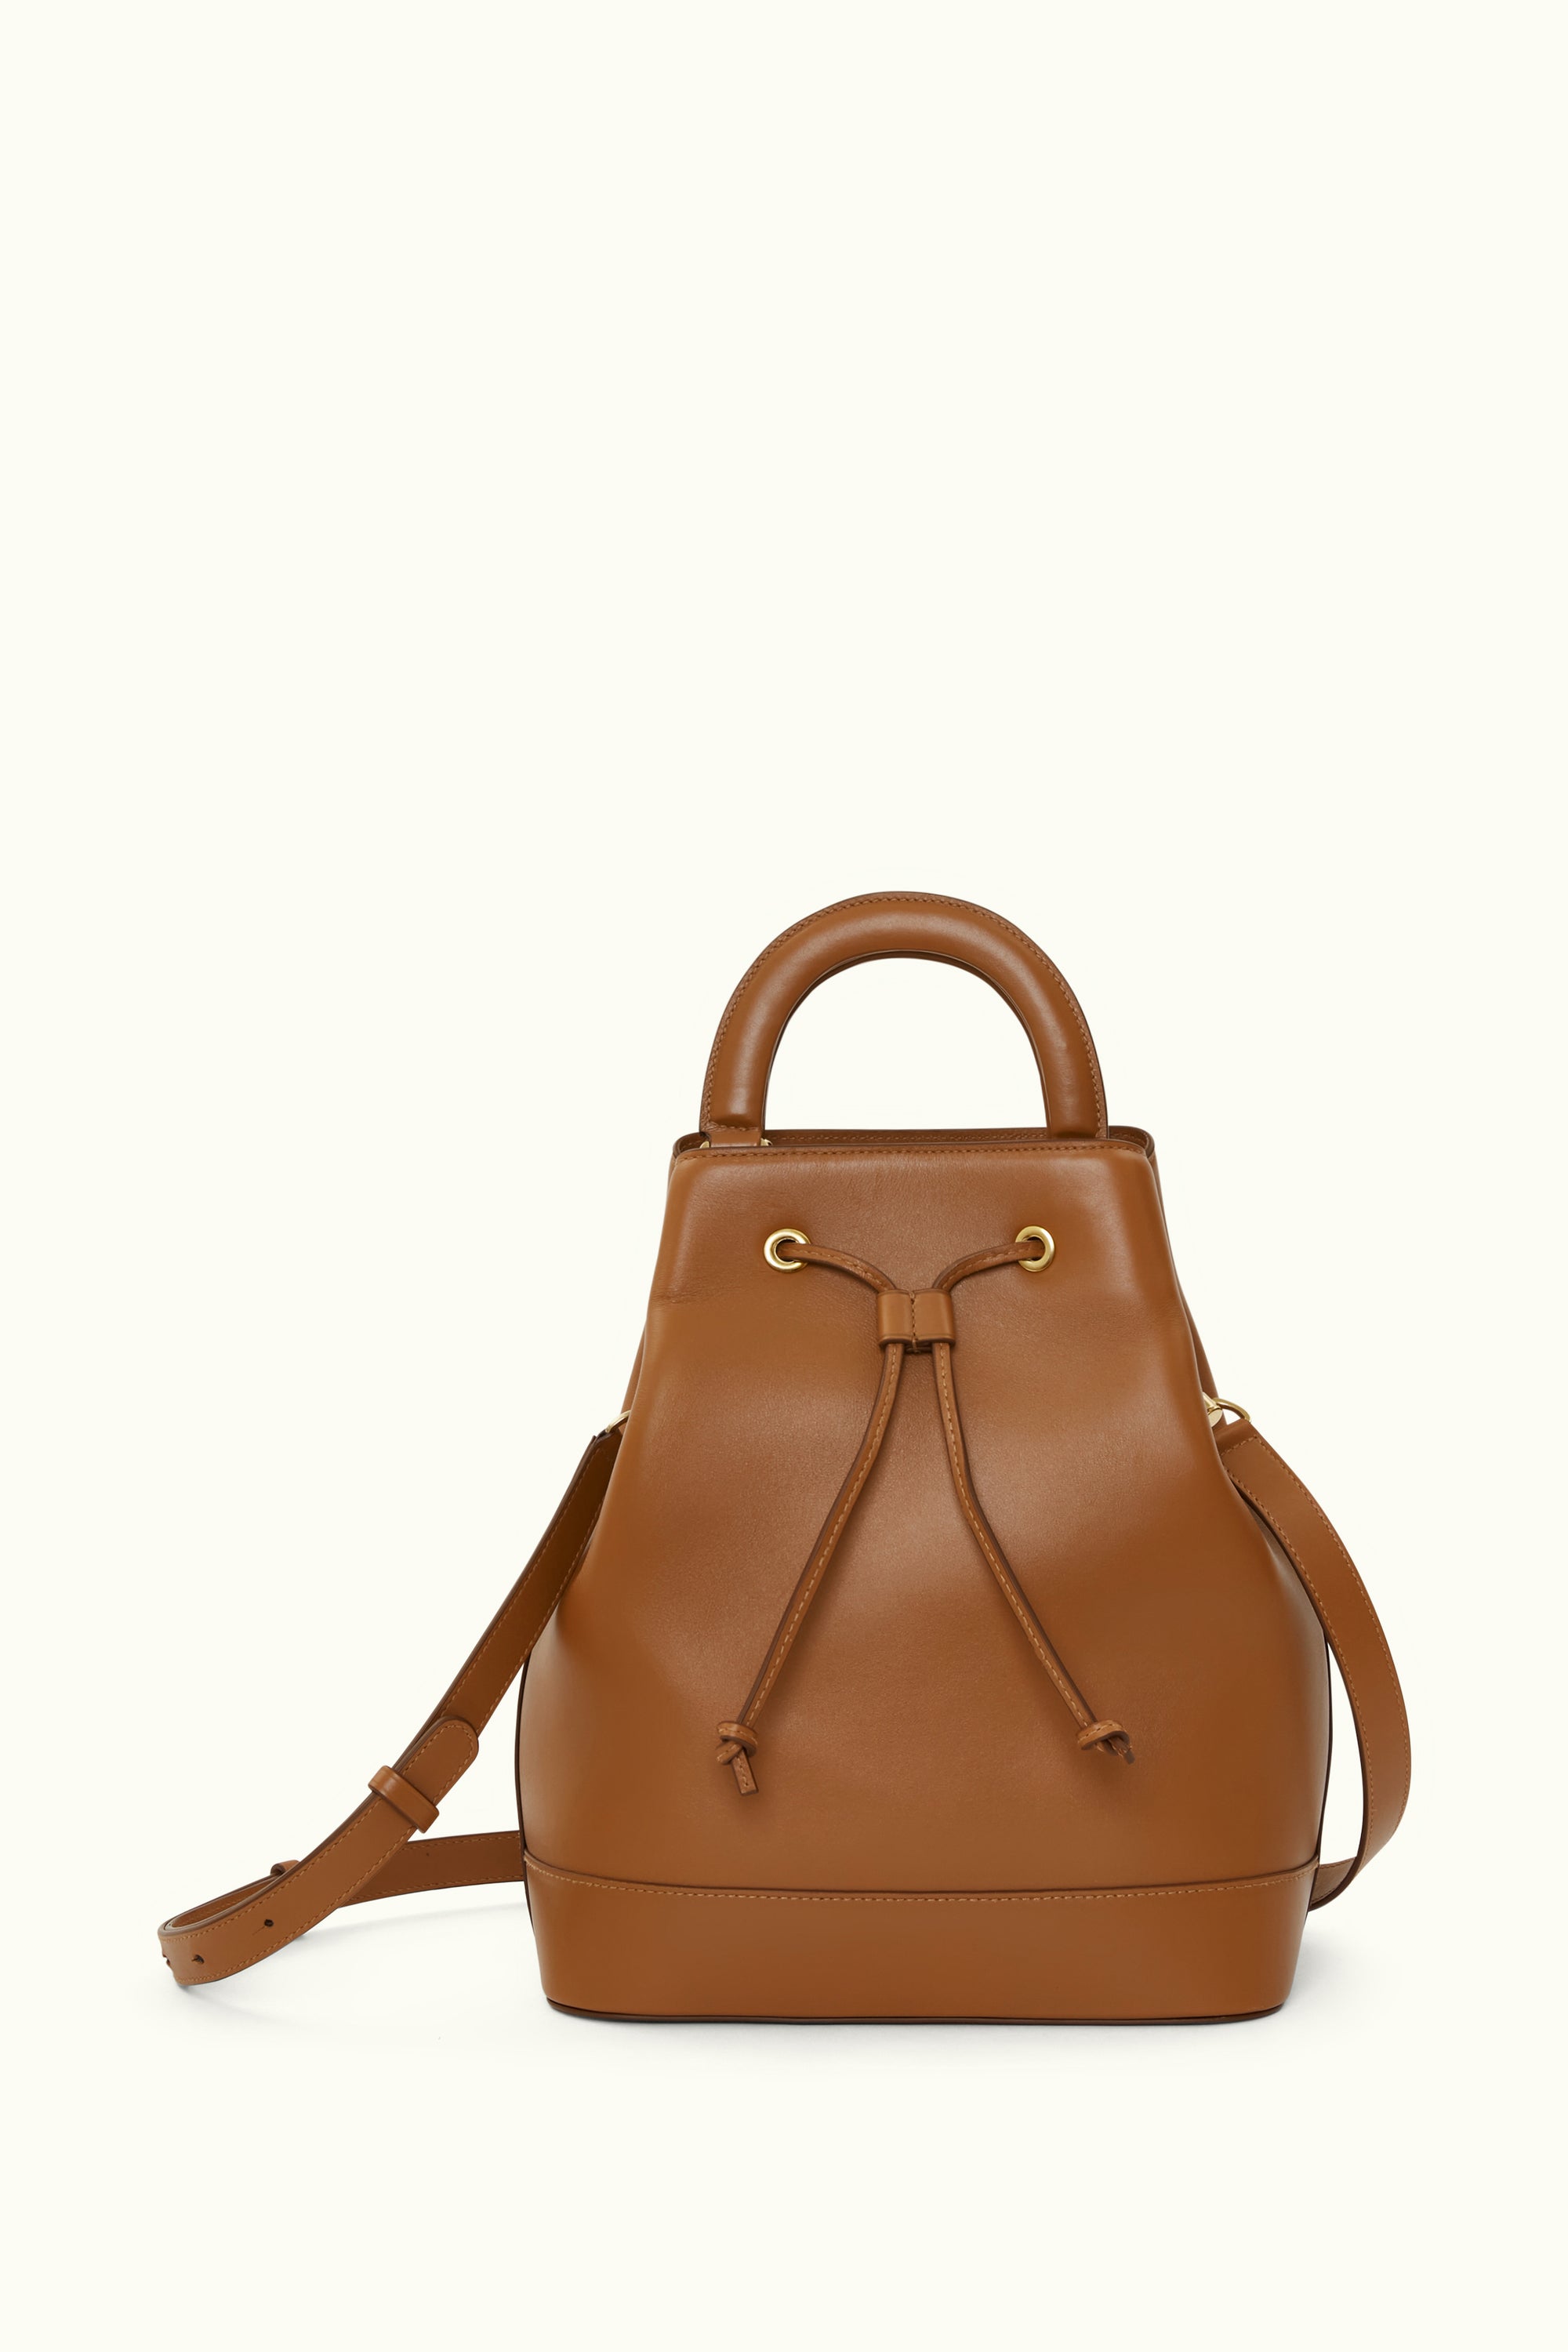 Dauphine leather handbag